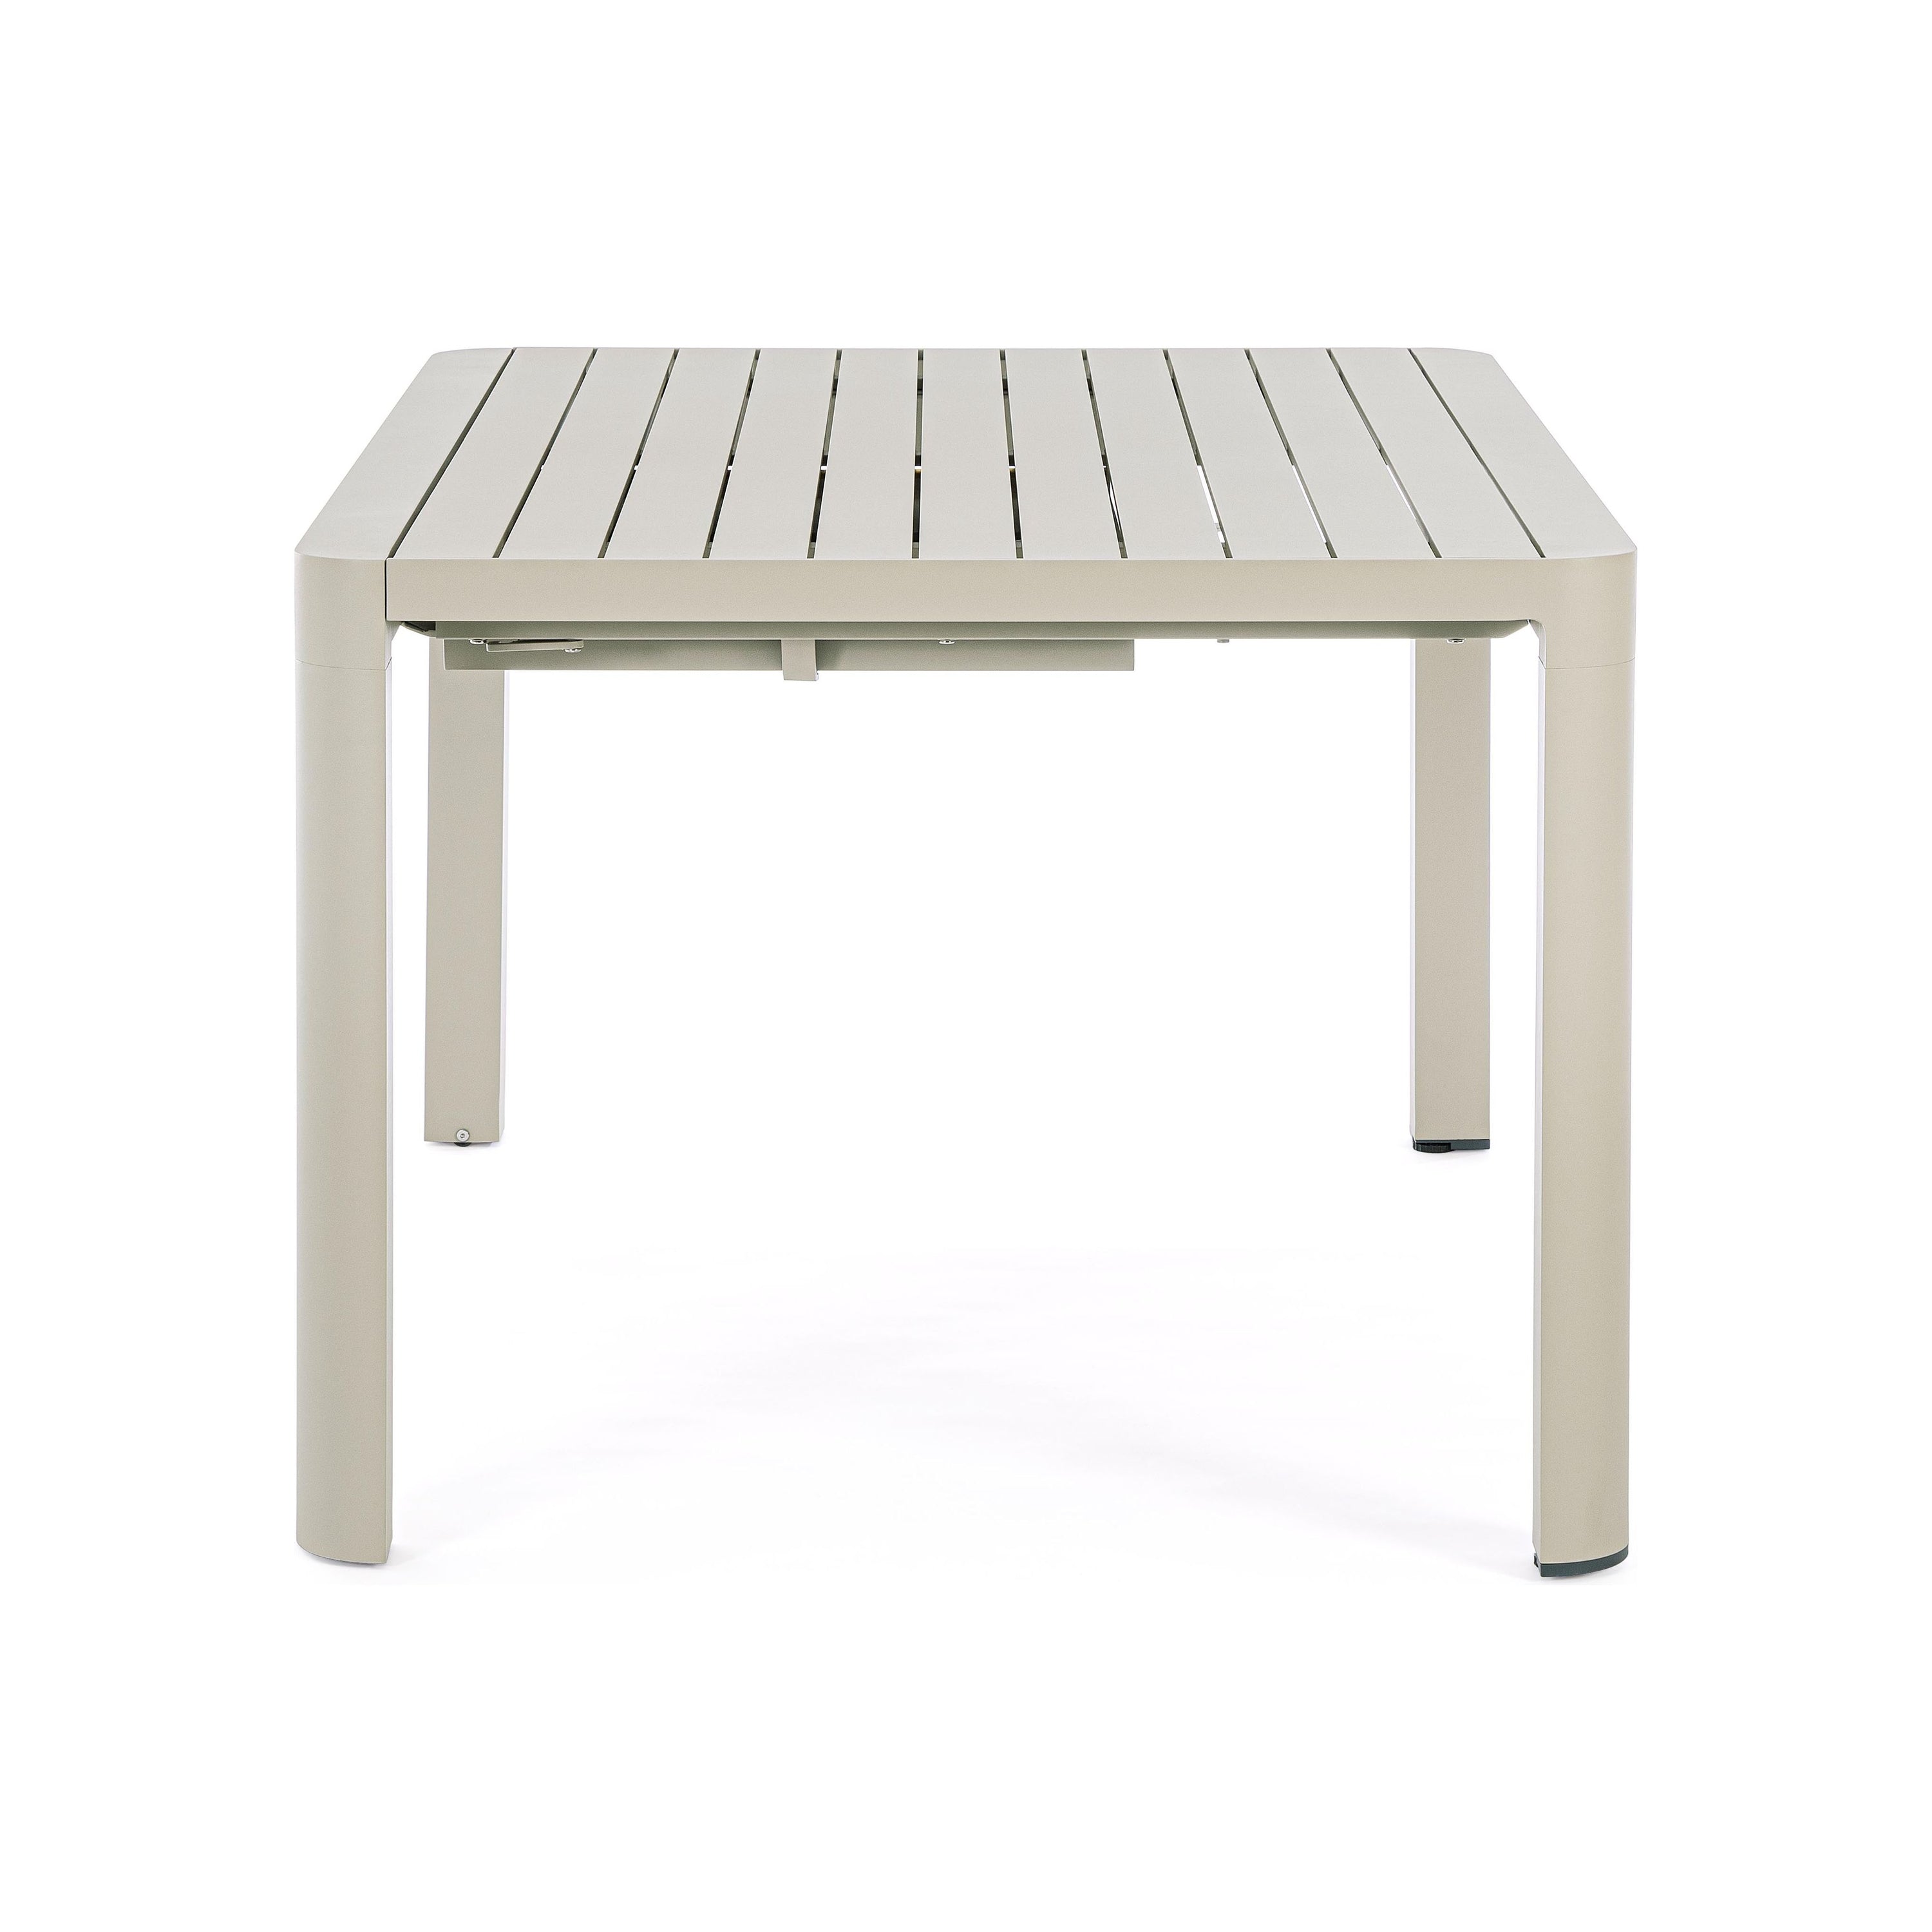 KIPLIN prasiilginantis lauko valgomojo stalas, 149-97x149cm, smėlio spalva